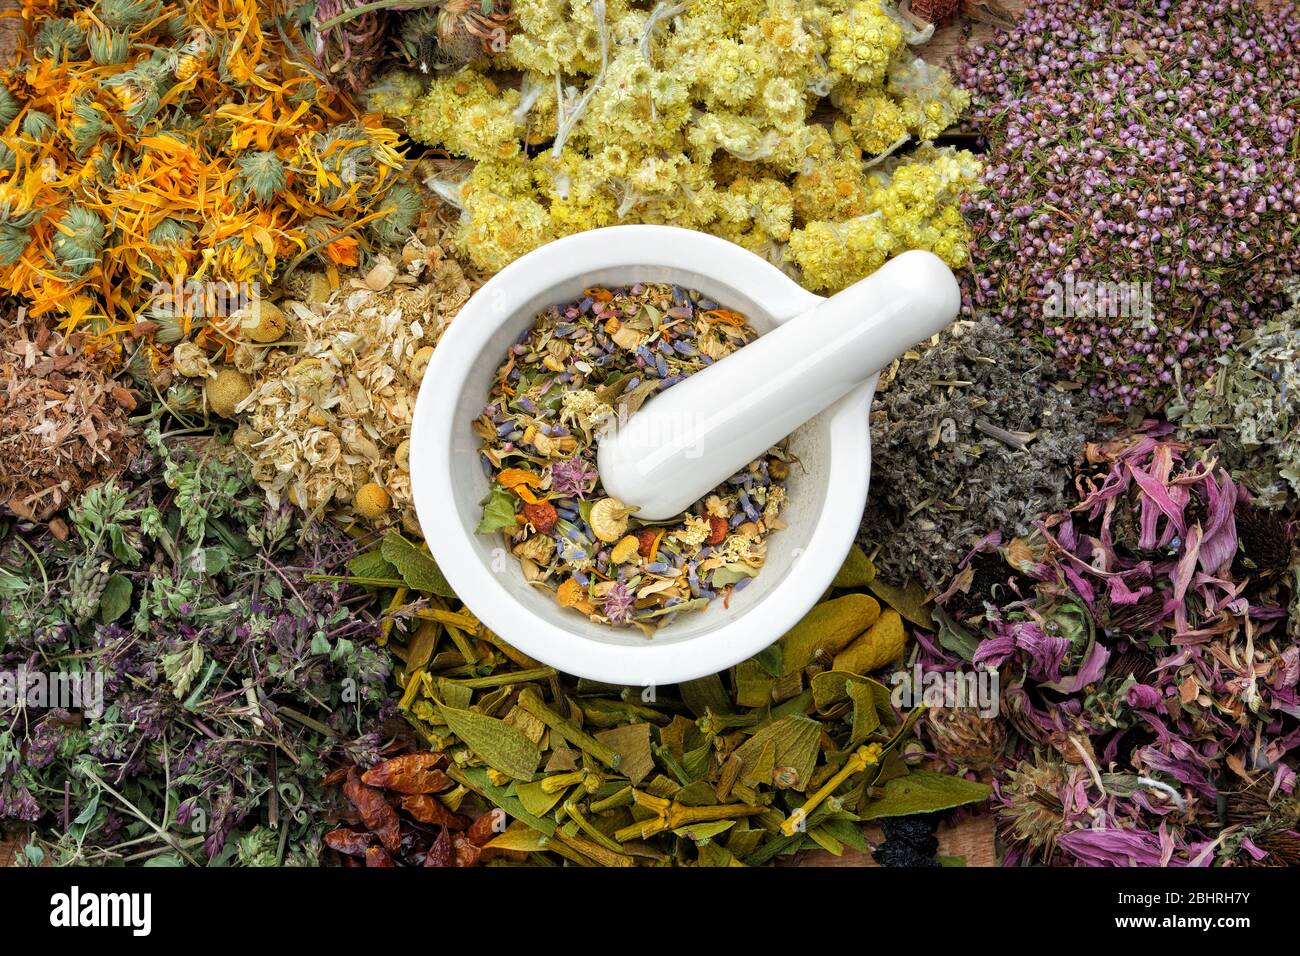 Healing herbs and mortar of medicinal herbs - thyme, coneflower, marigold, daisies, helichrysum flowers, heather, mistletoe. Herbal medicine, top view Stock Photo